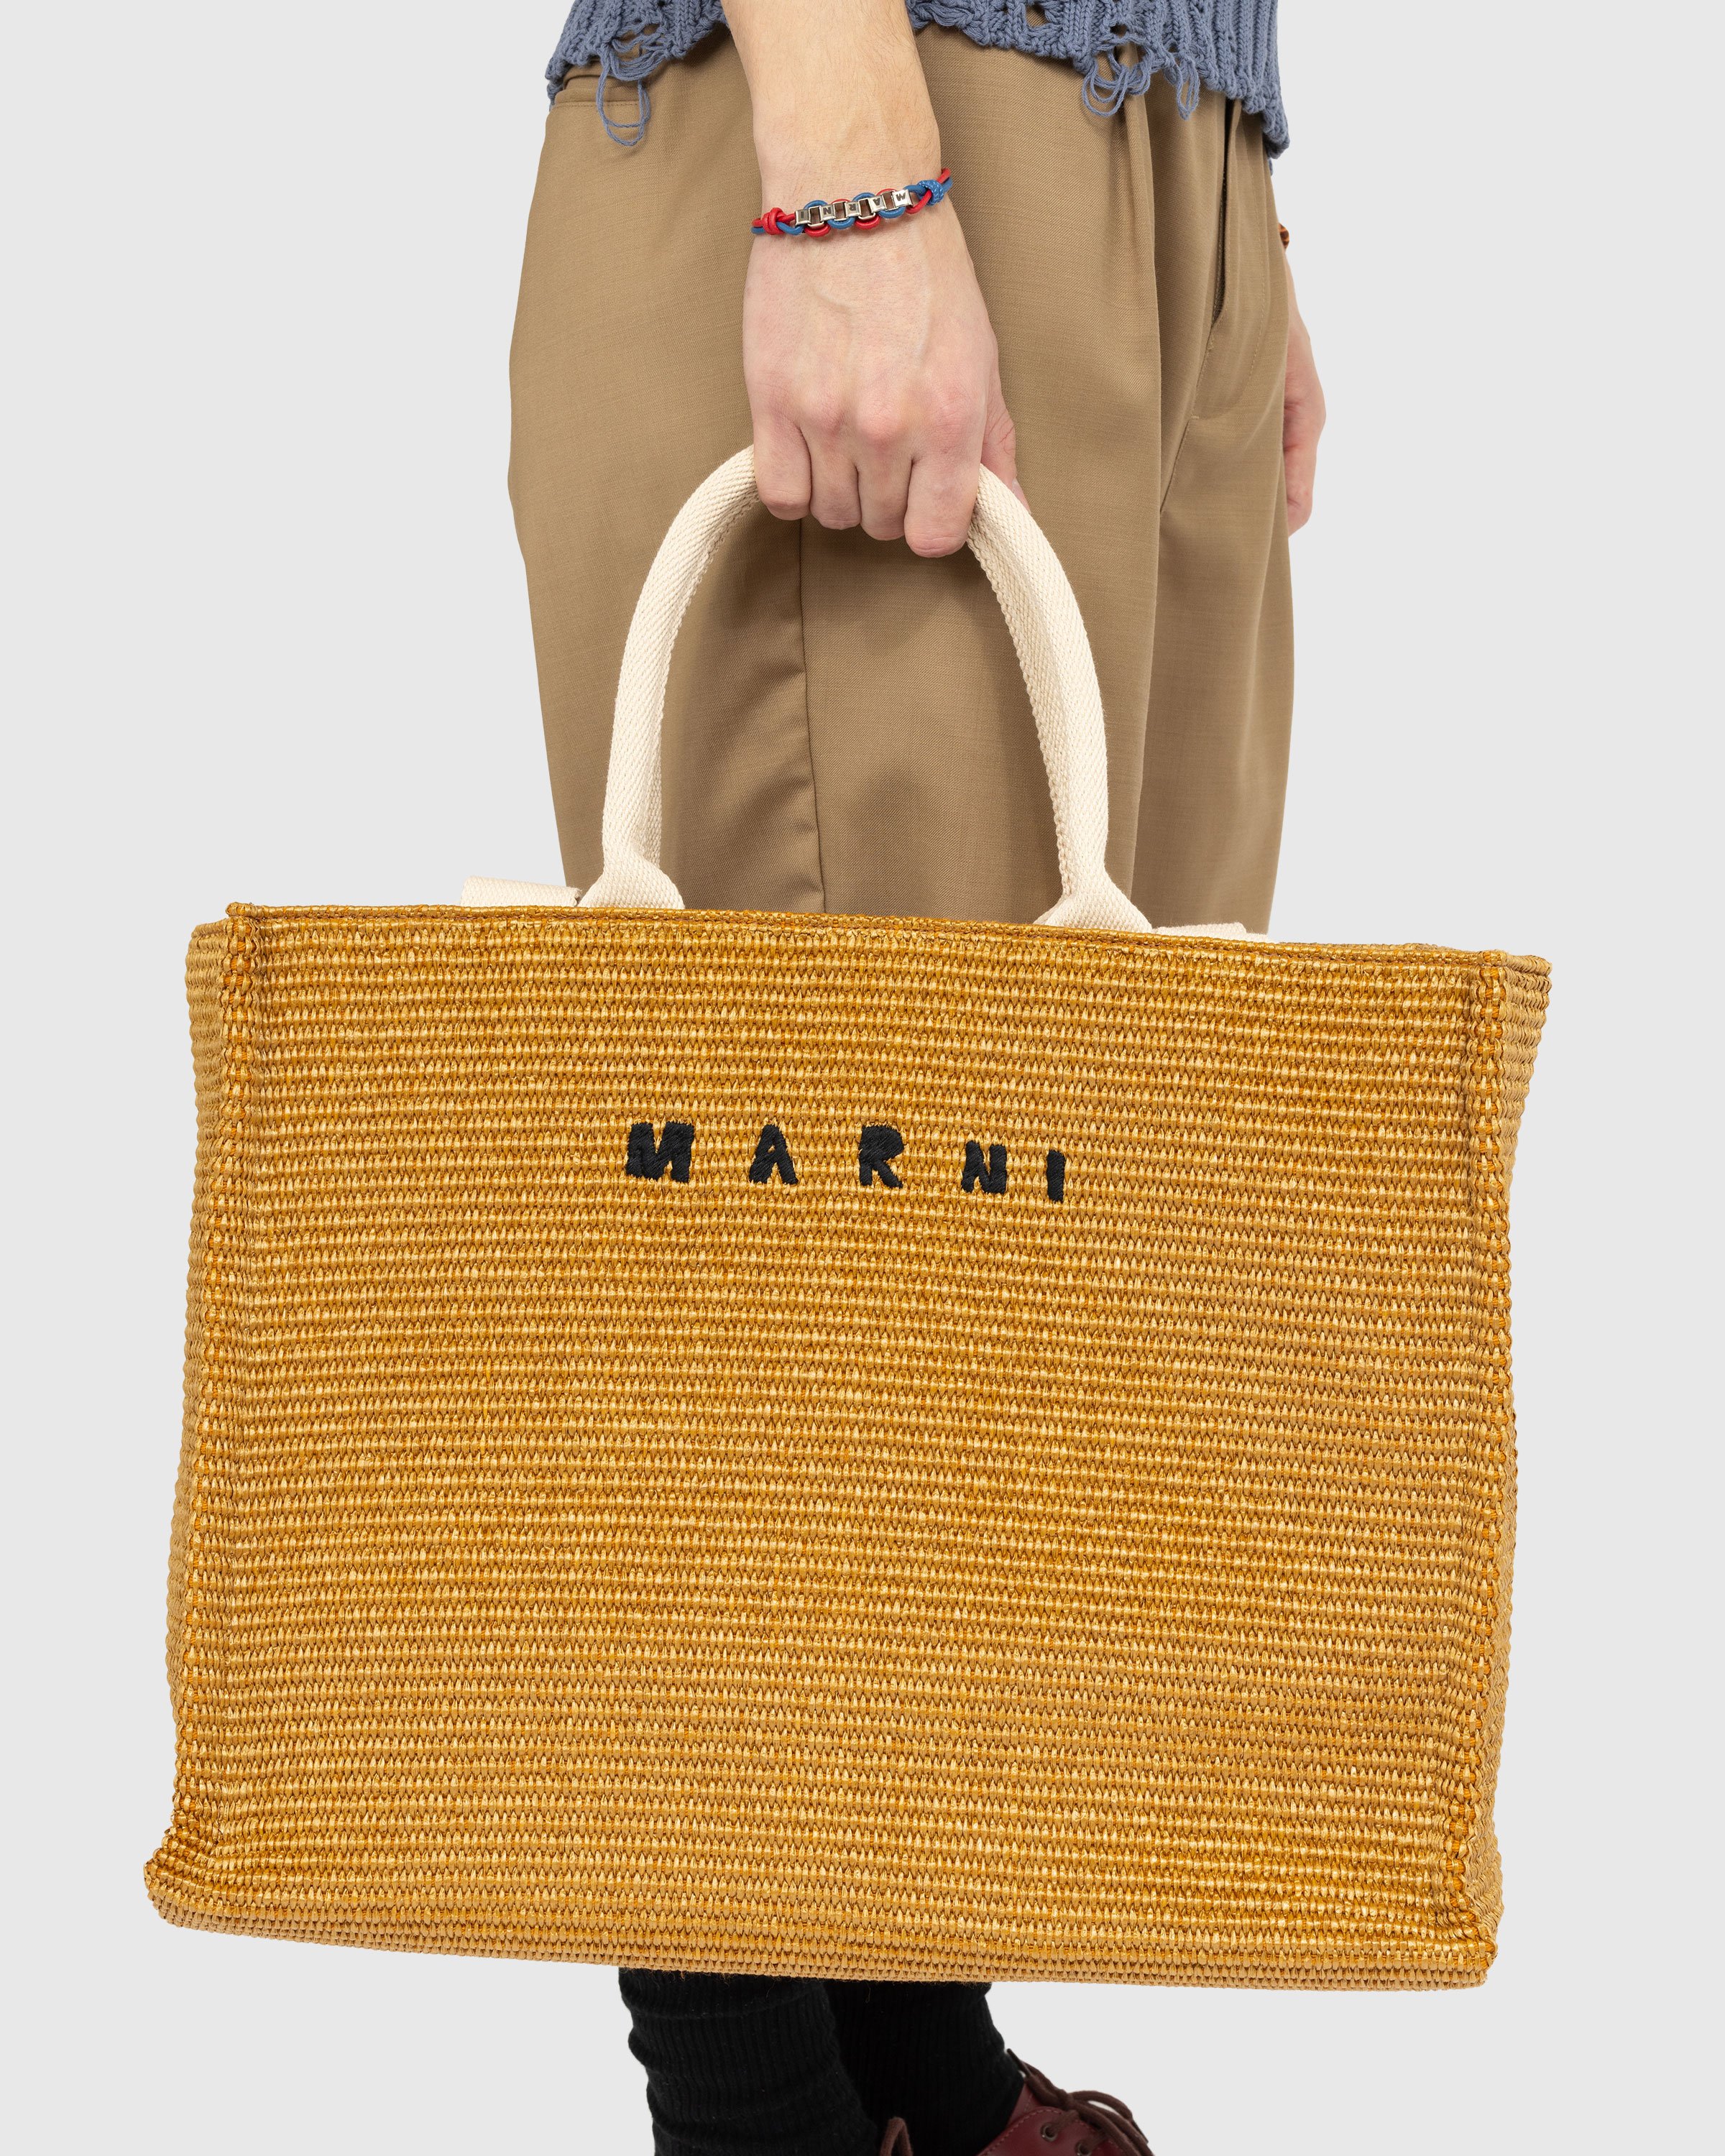 Marni - Large Raffia Tote Bag Raw Sienna/Natural - Accessories - Brown - Image 2